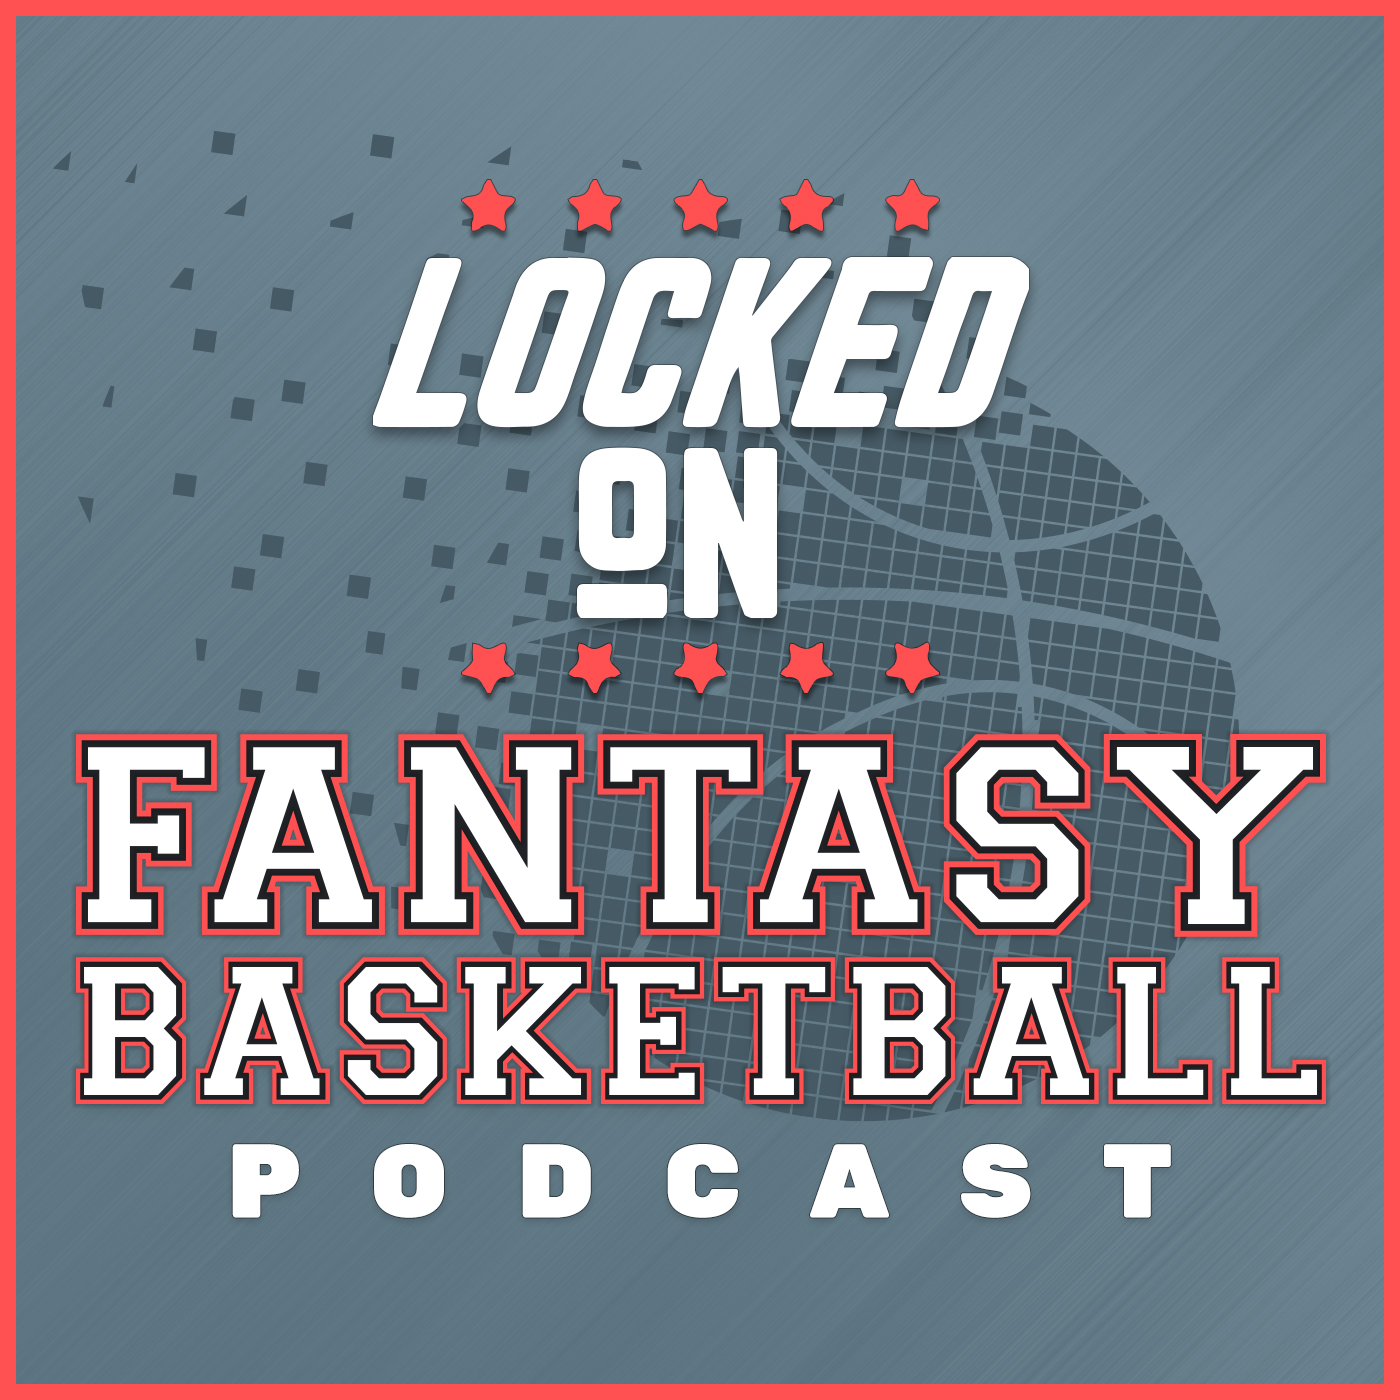 Ready go to ... https://link.chtbl.com/LOFantasyBasketball?sid=YouTube [ Locked On Fantasy Basketball – Daily NBA Fantasy Basketball Podcast]